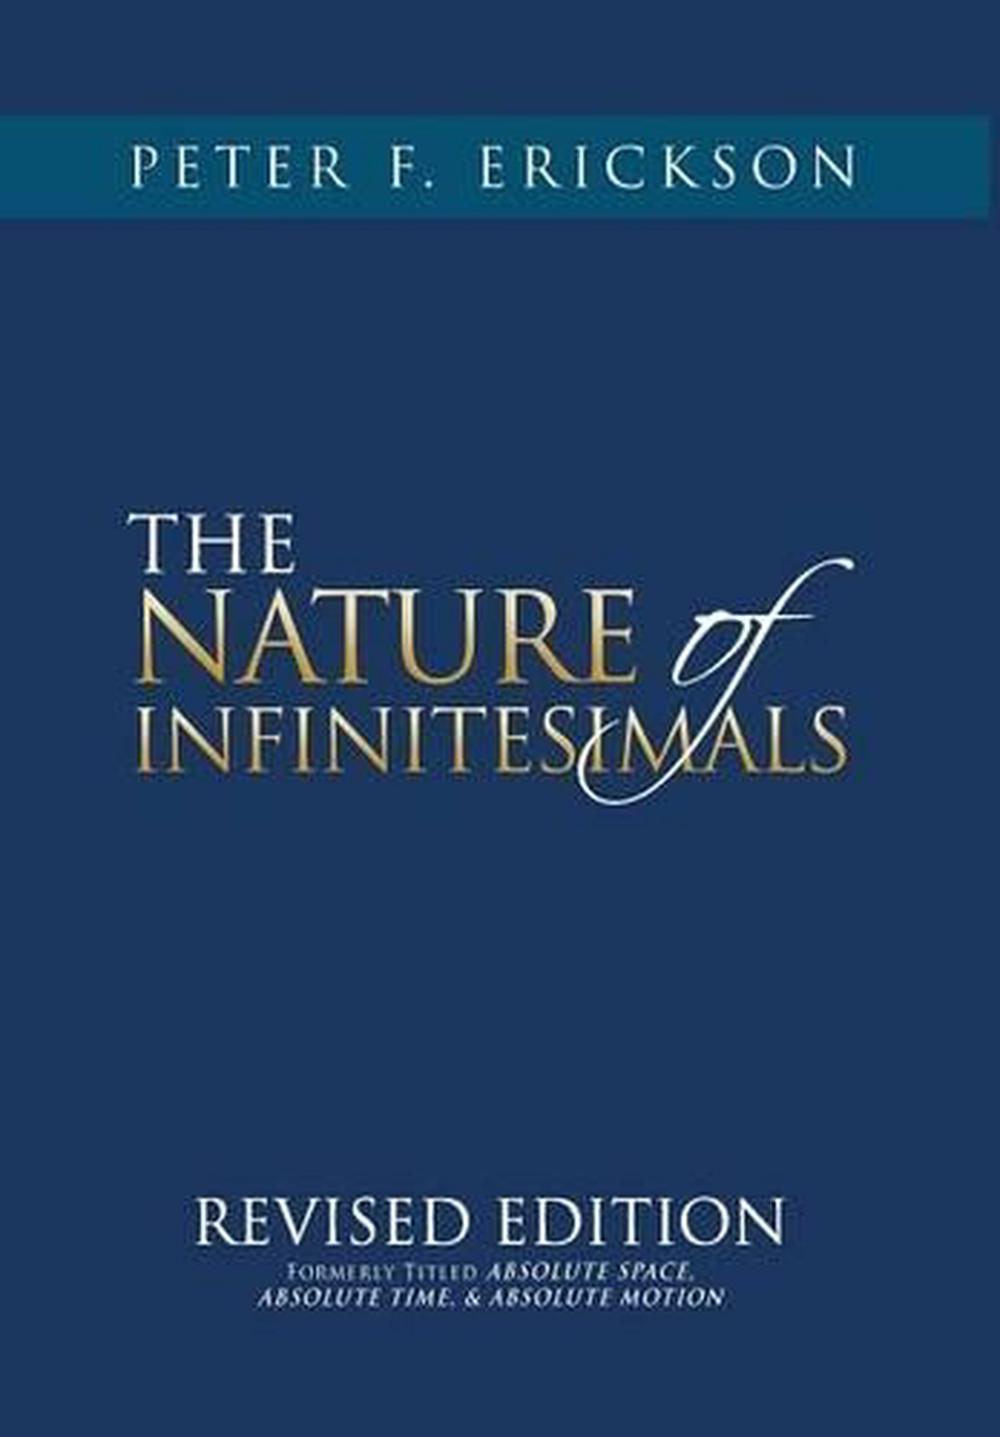 infinitesimals book